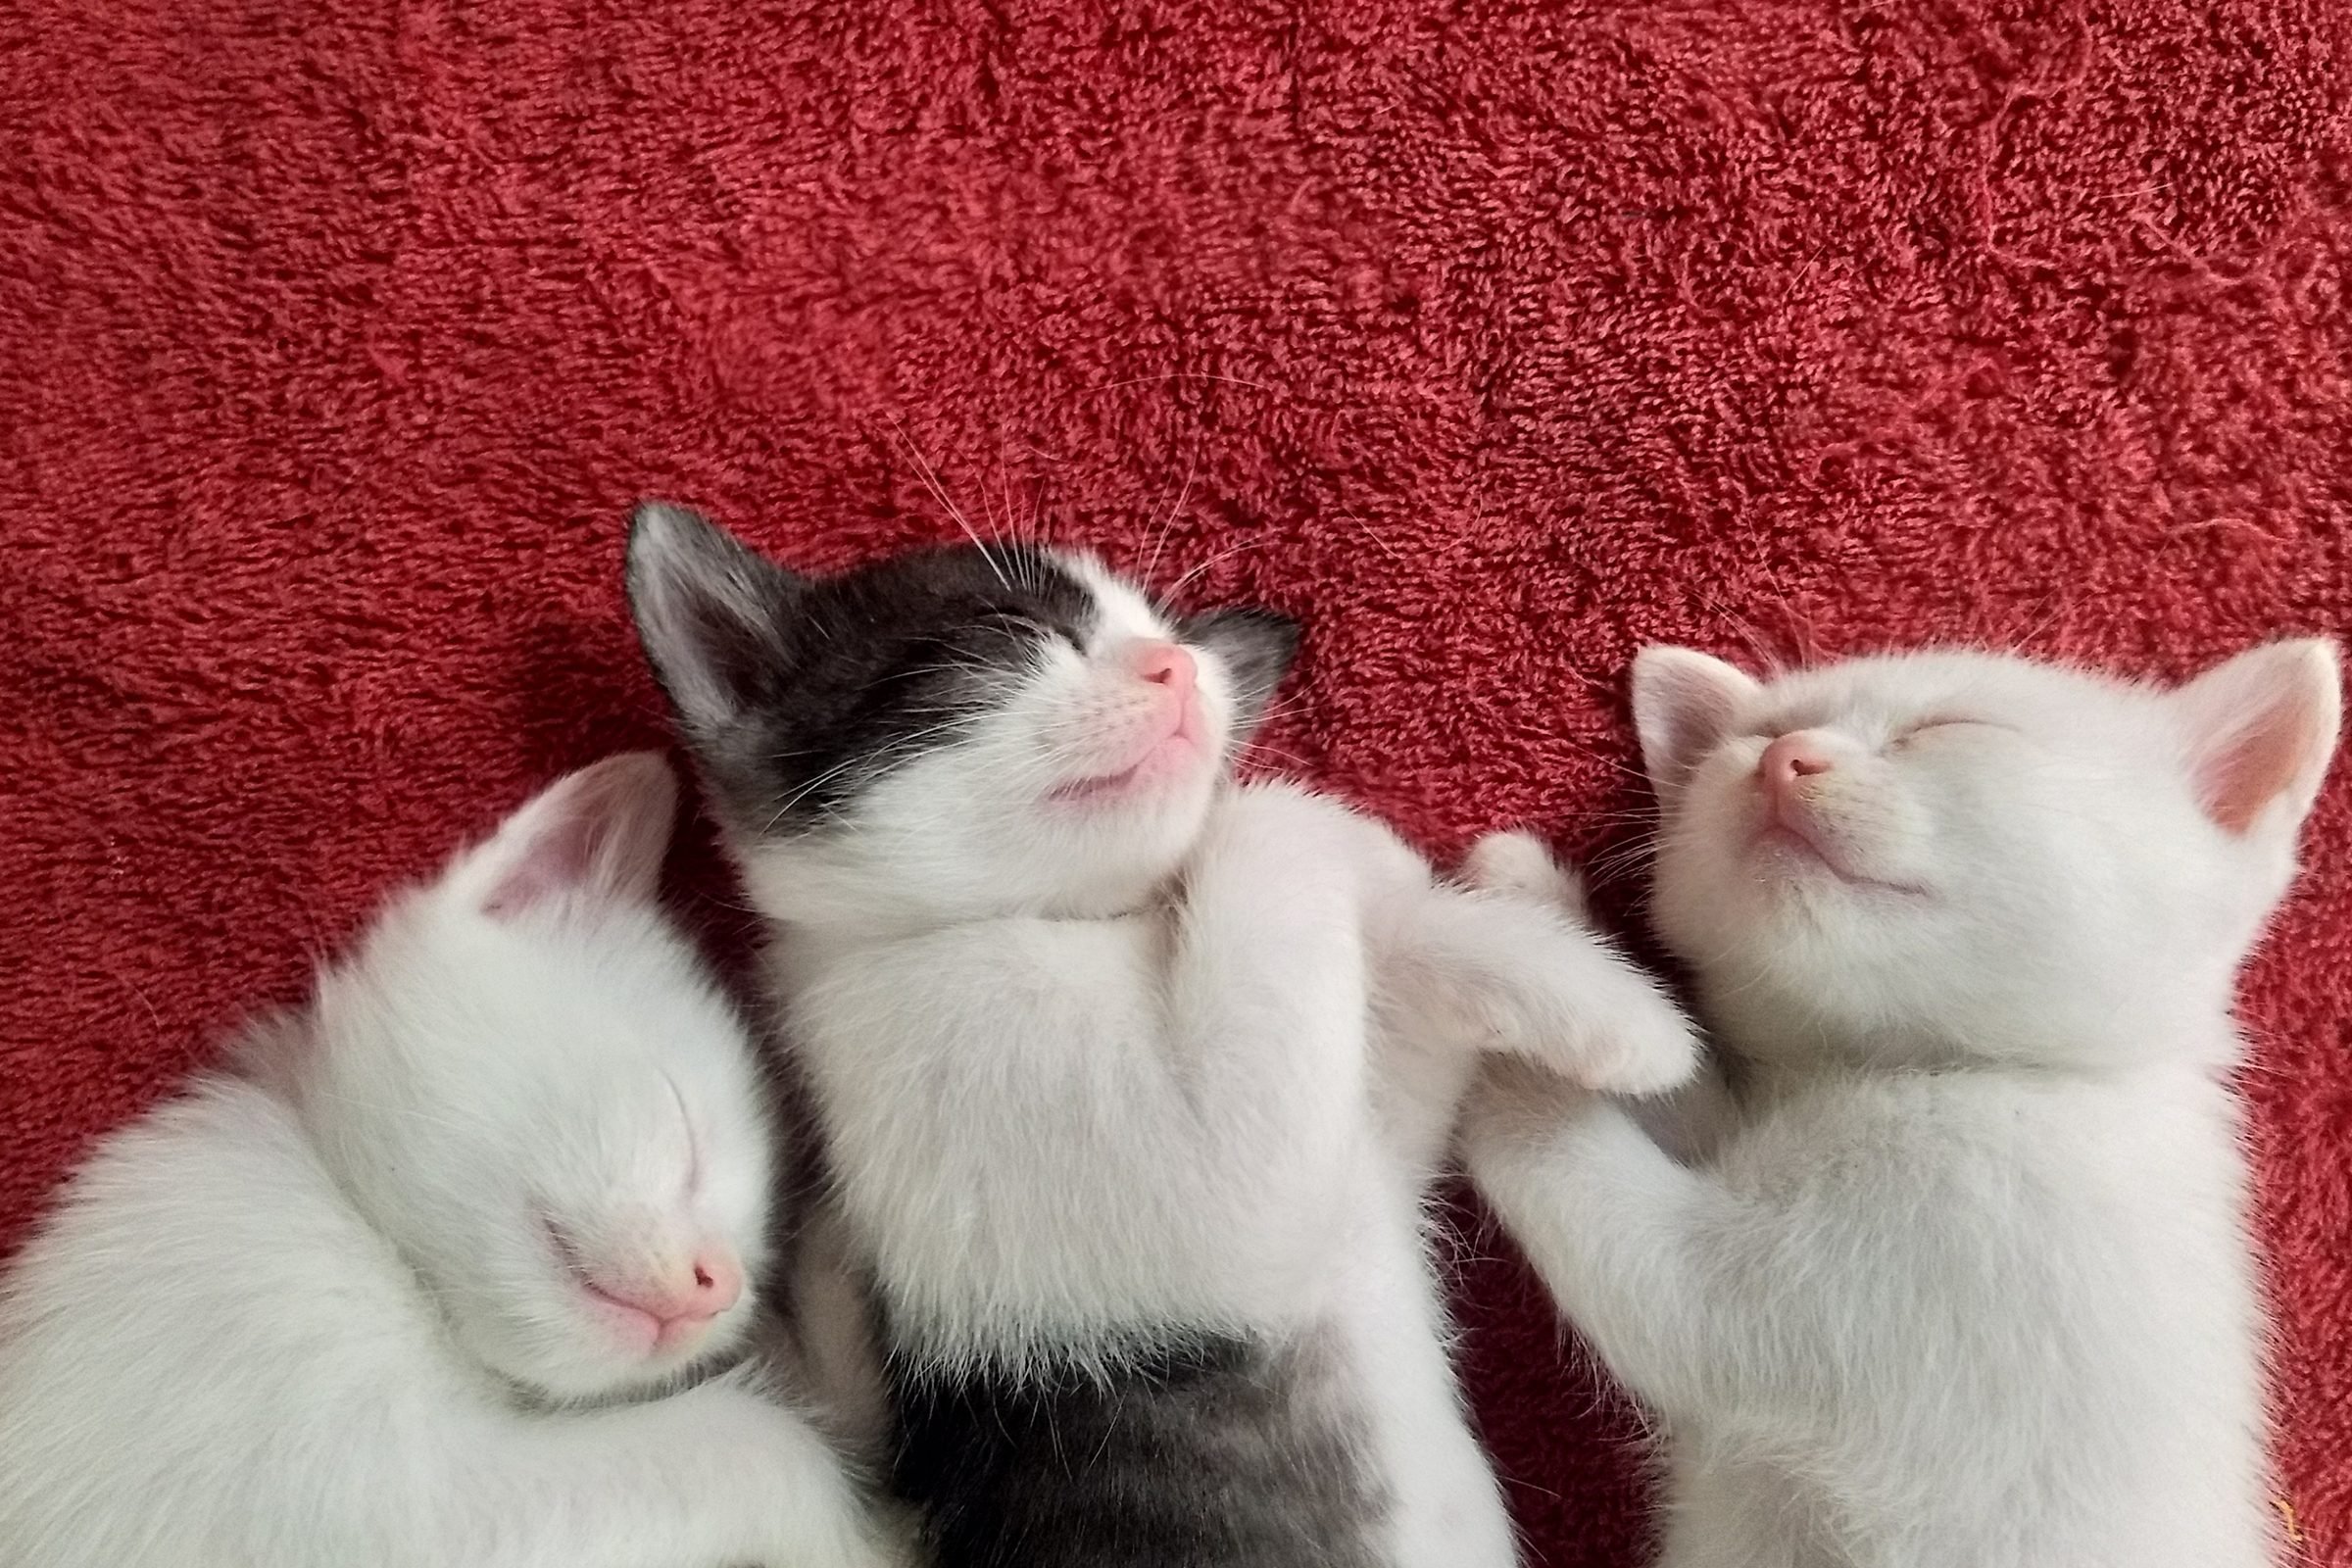 Cute Kittens Sleeping Together